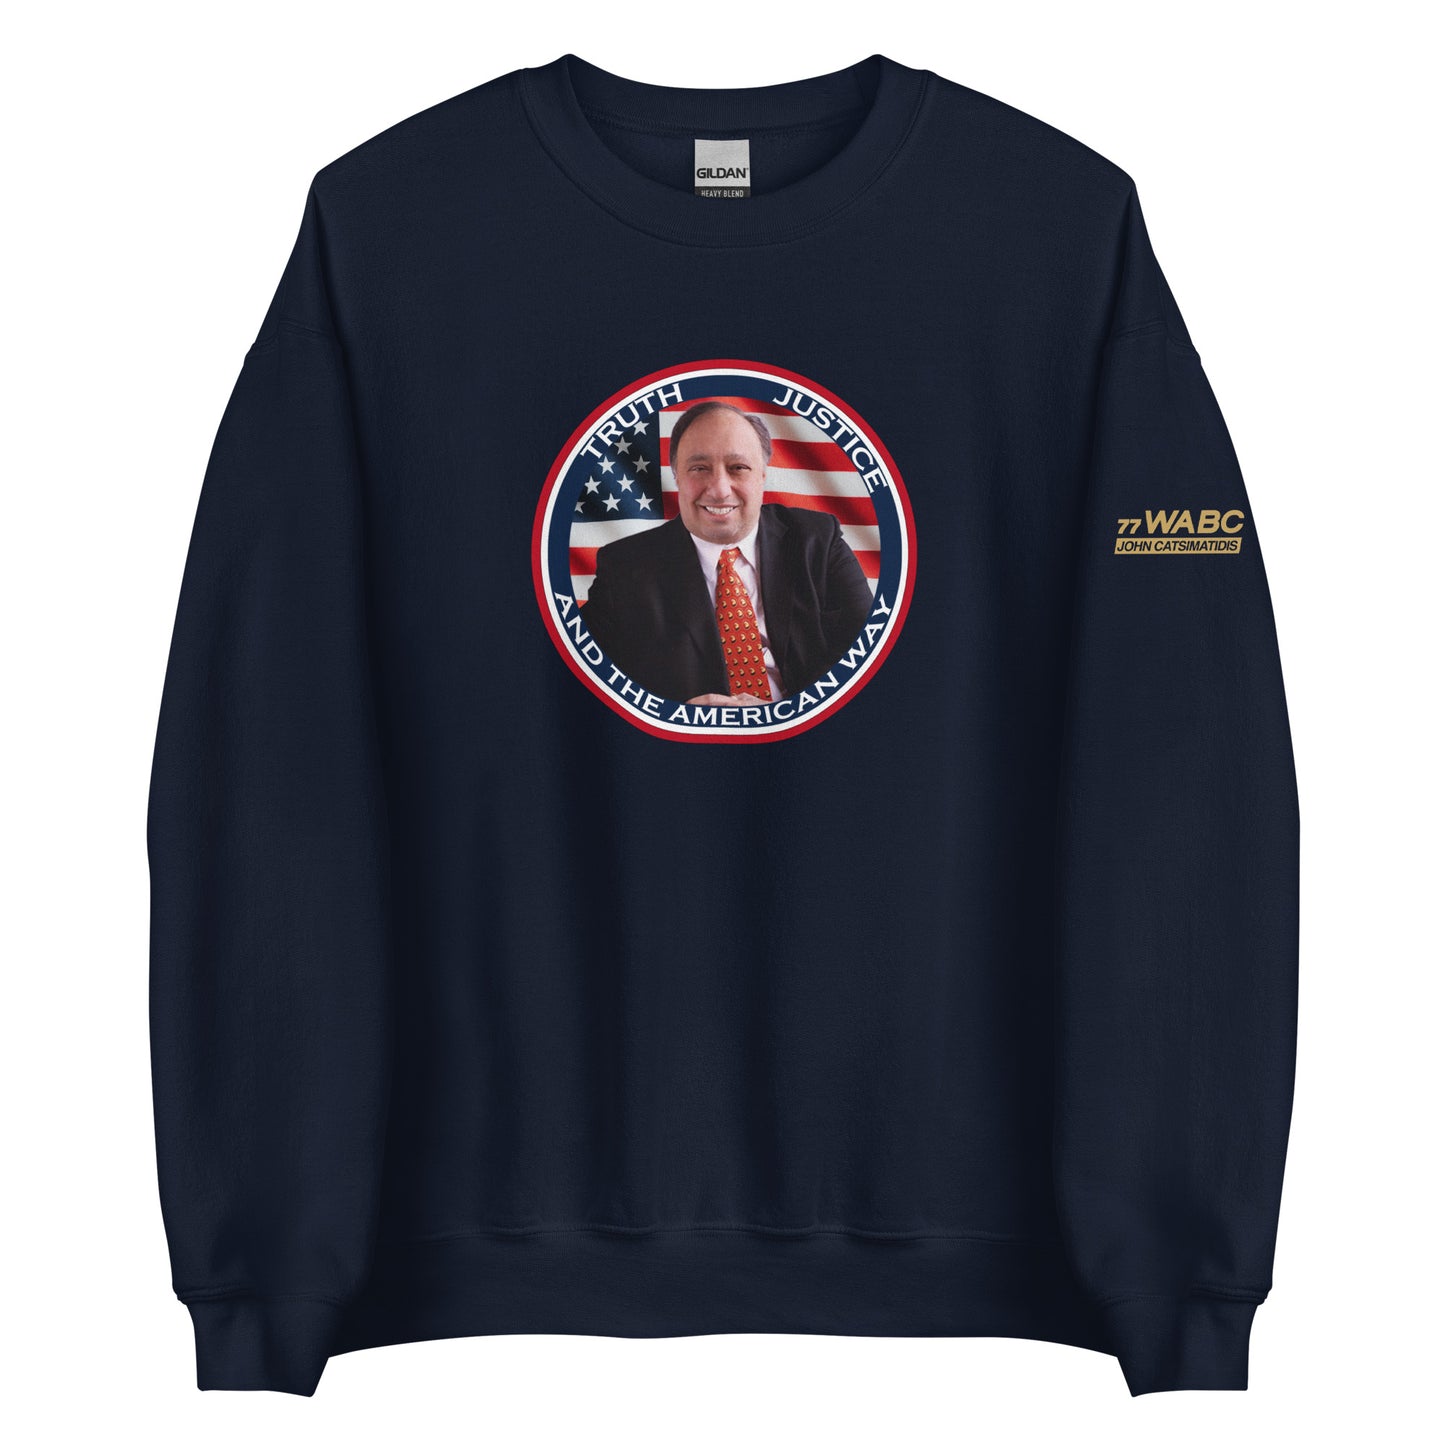 Truth, Justice, The American Way John Cats Sweatshirt